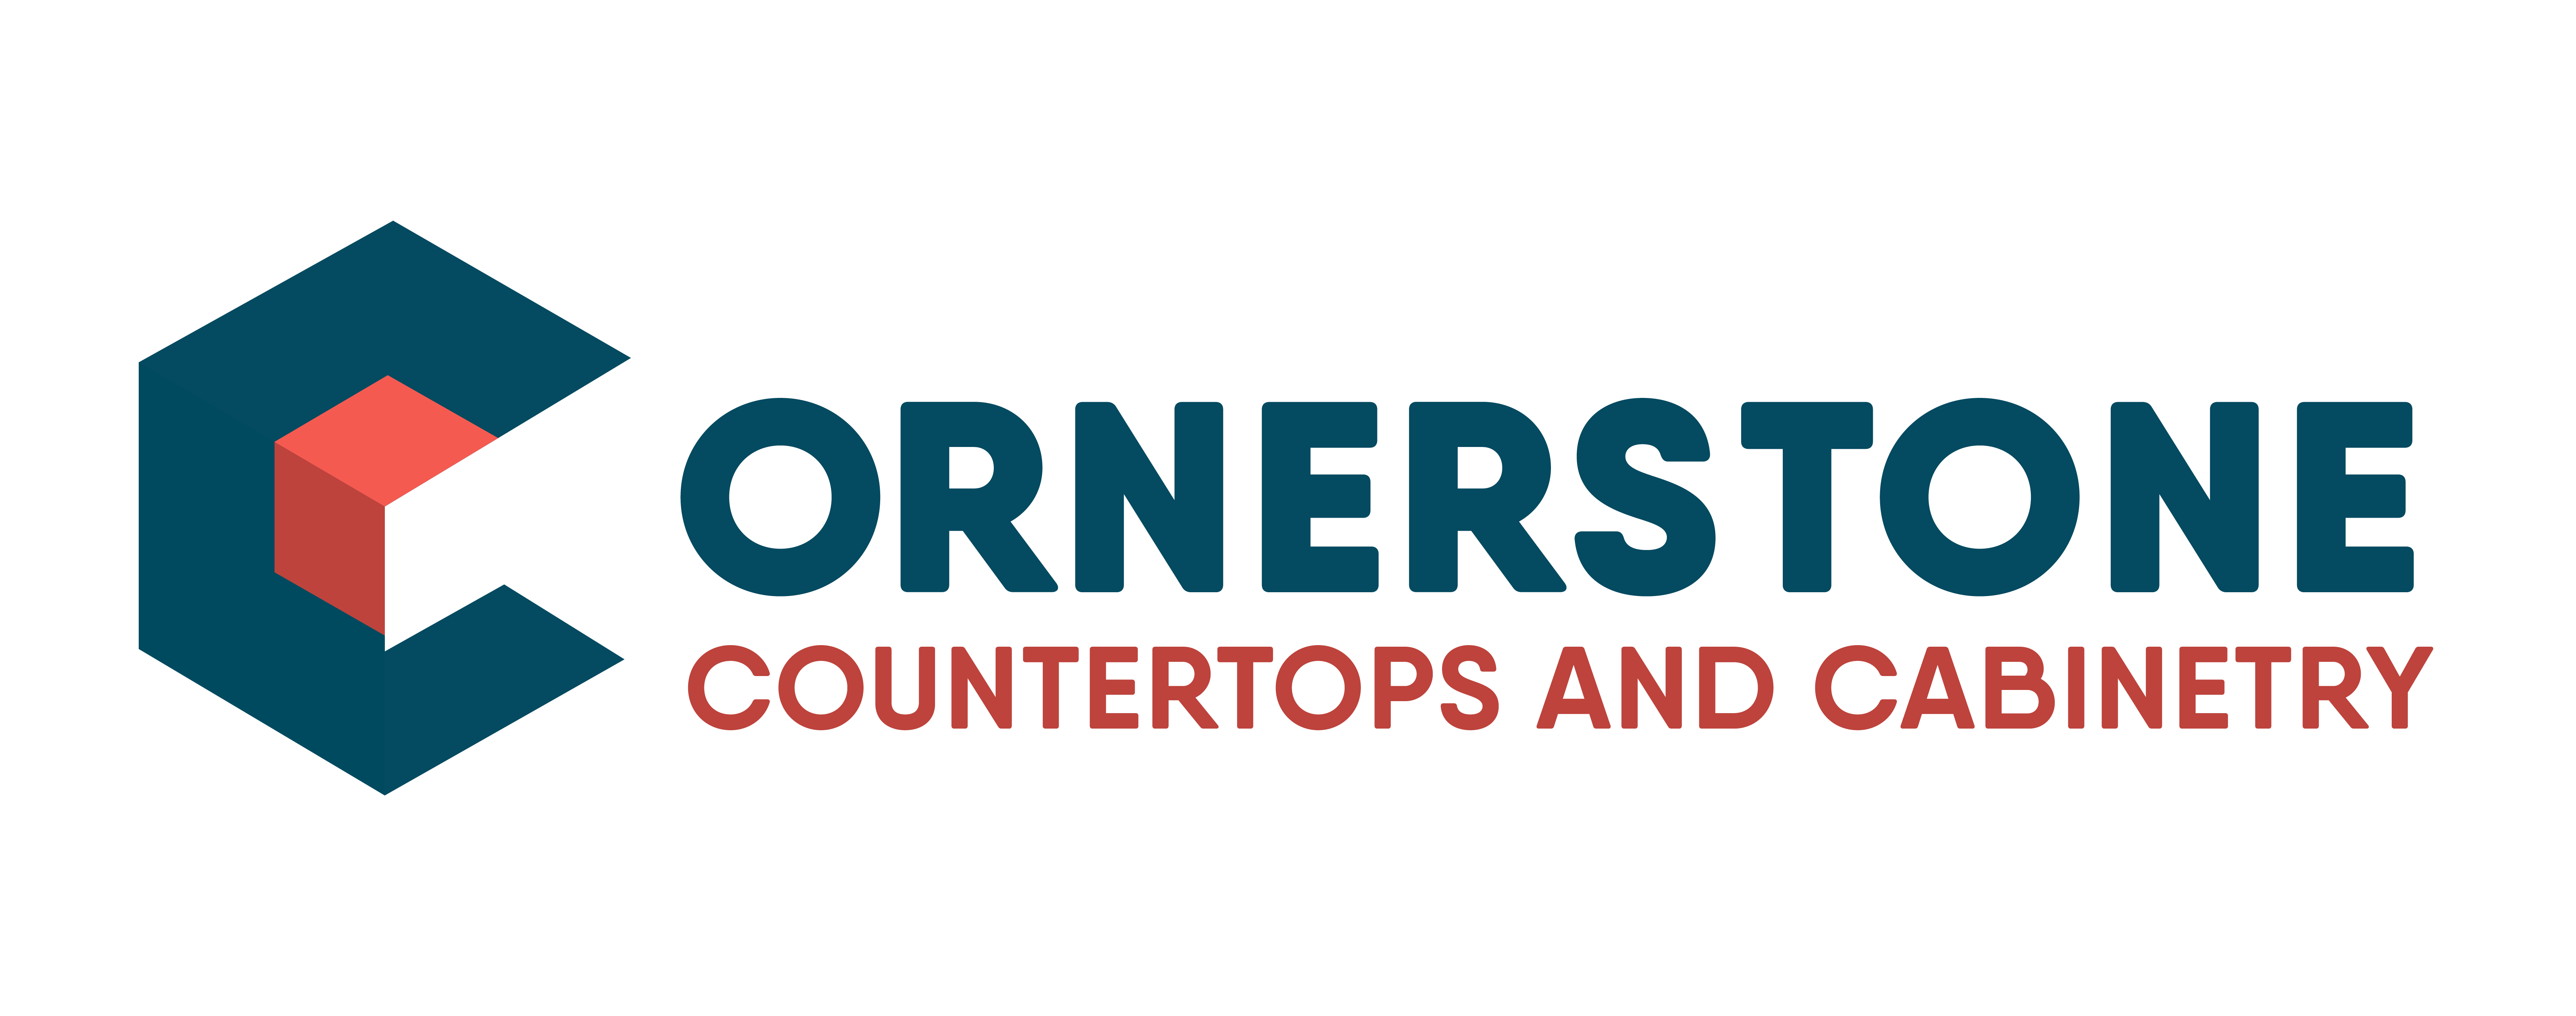 Cornerstone Countertops and Cabinetry, LLC Logo